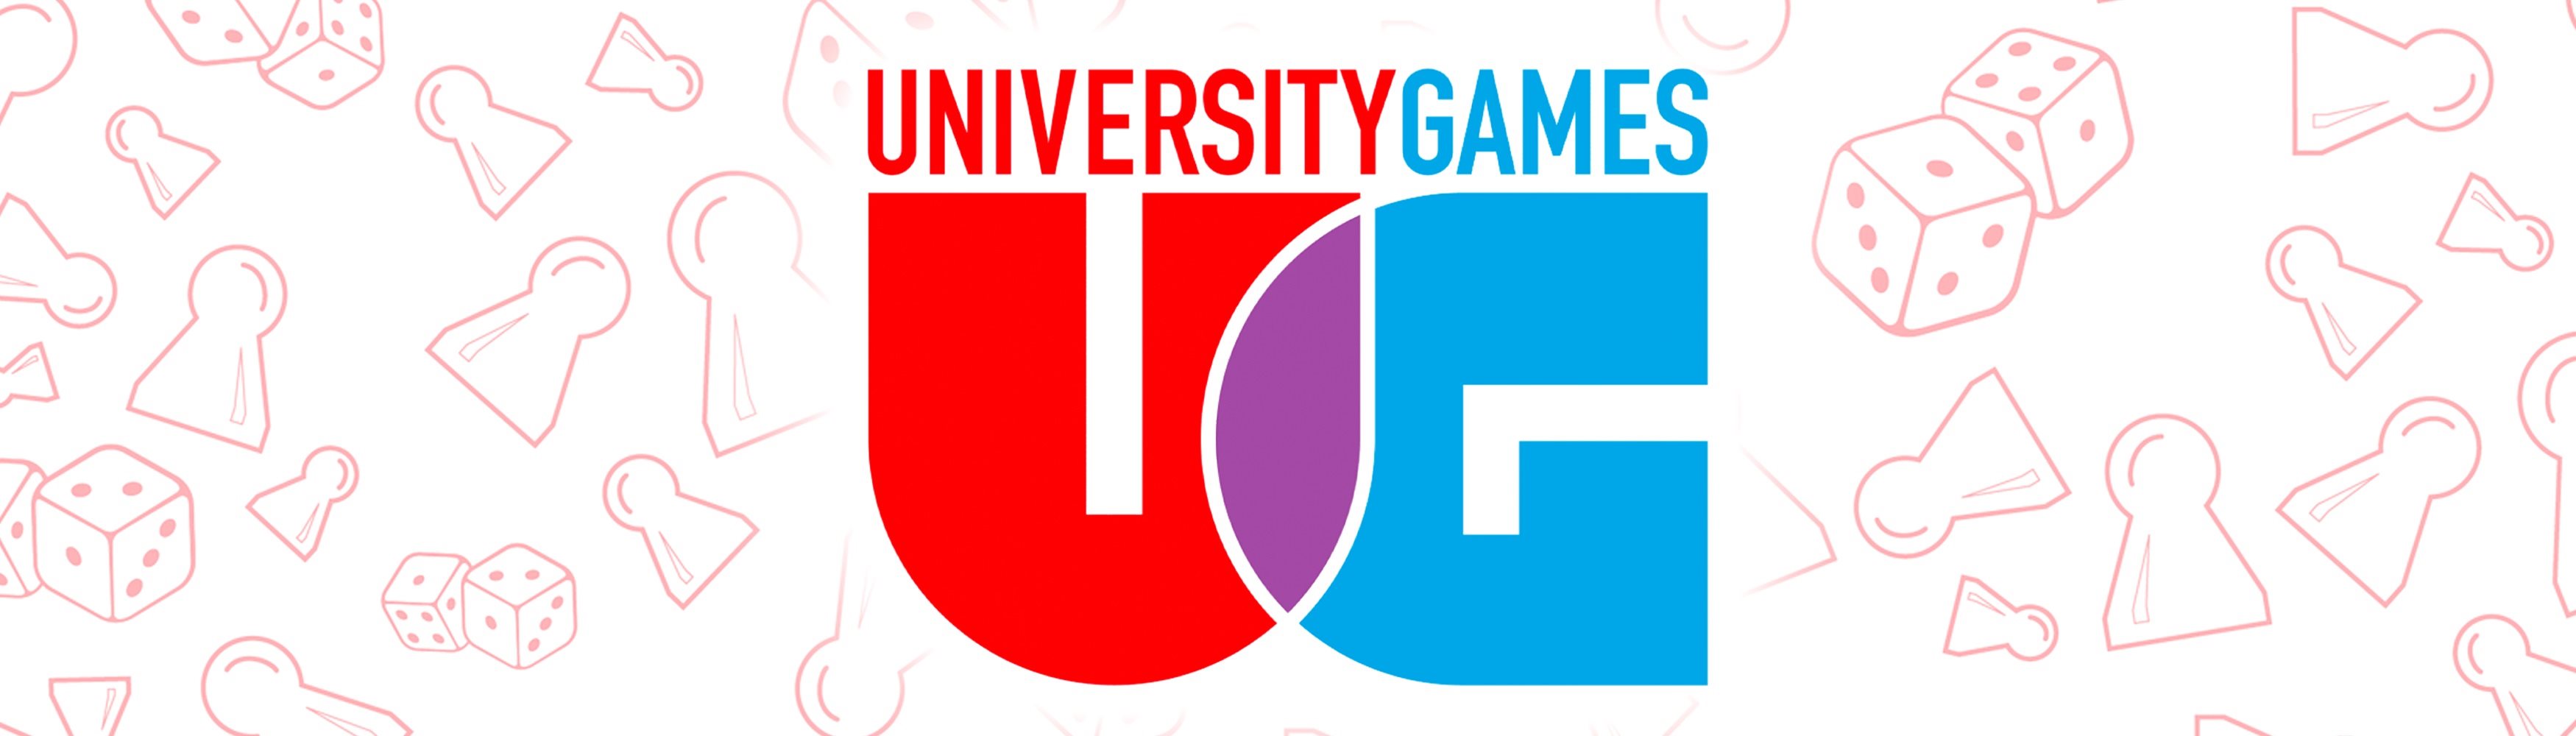 University Games 